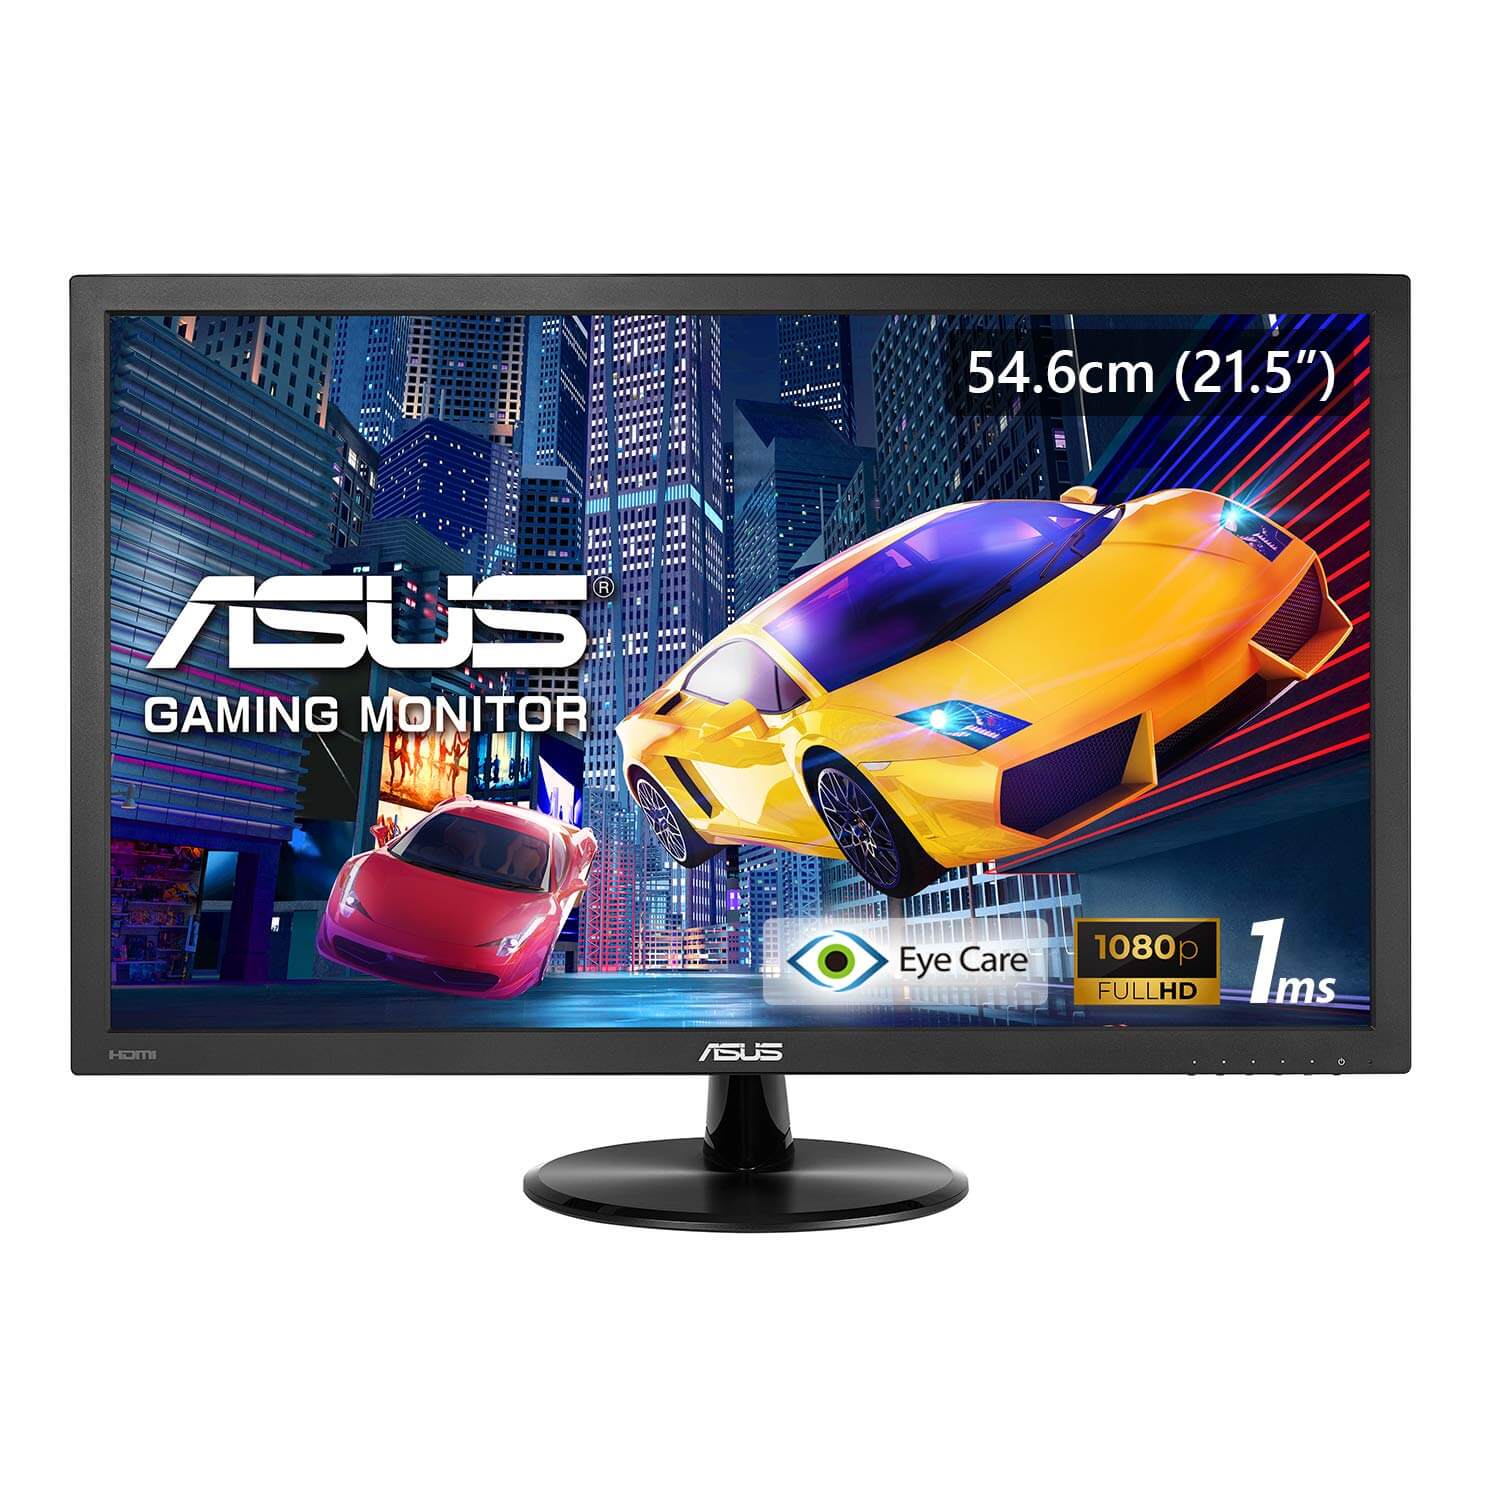 ASUS VP228H 21.5-inch Gaming Monitor